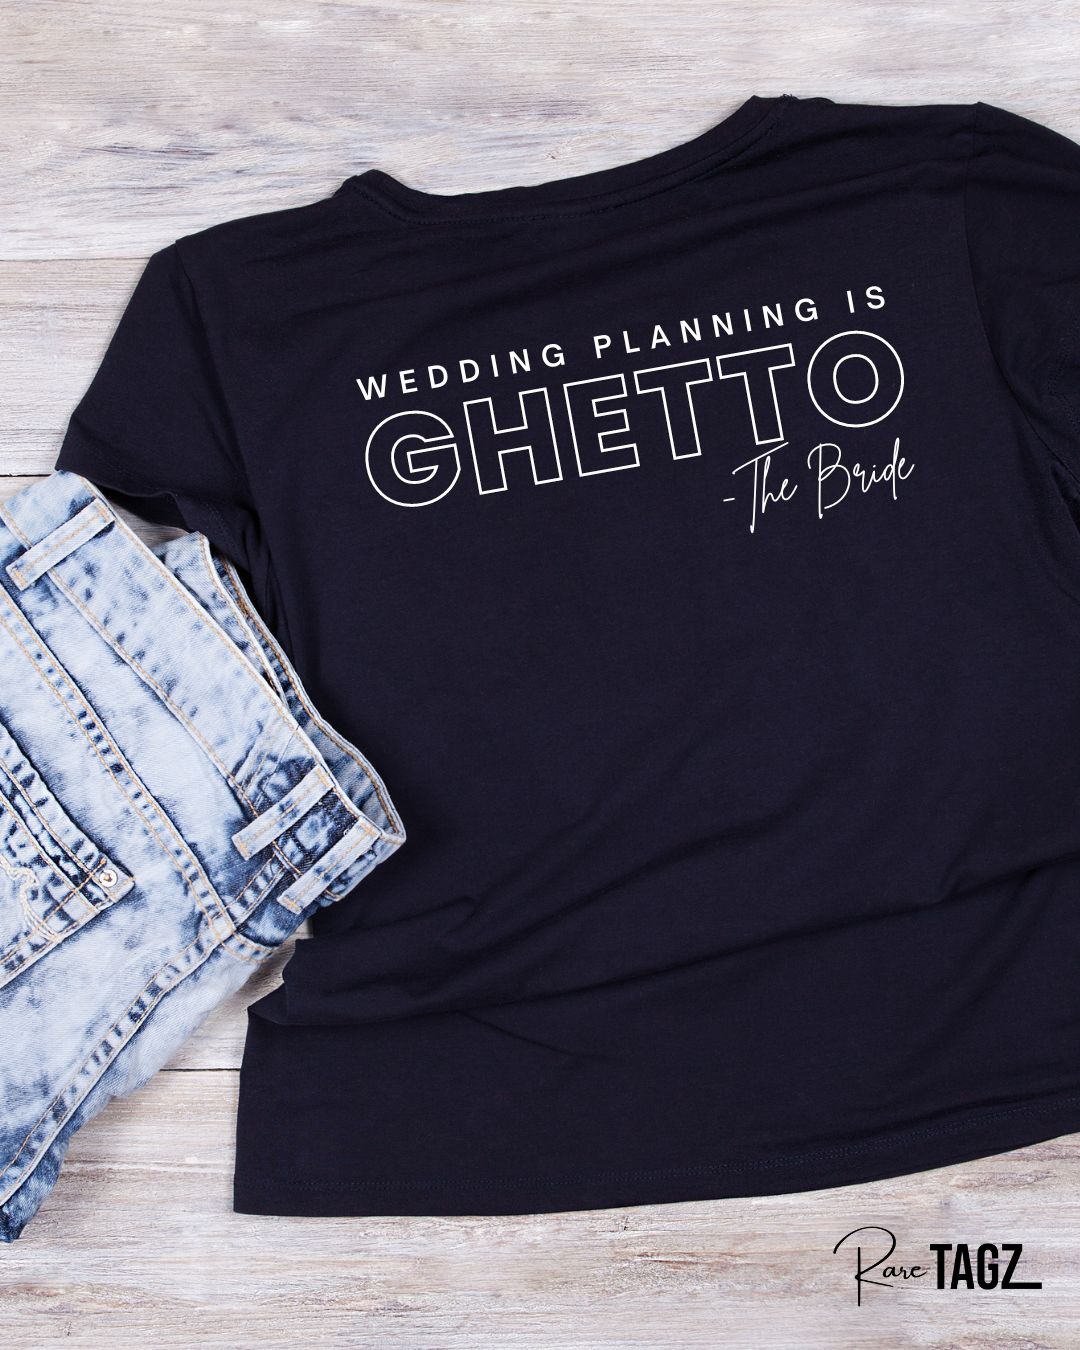 Wedding Planning is GHETTO!